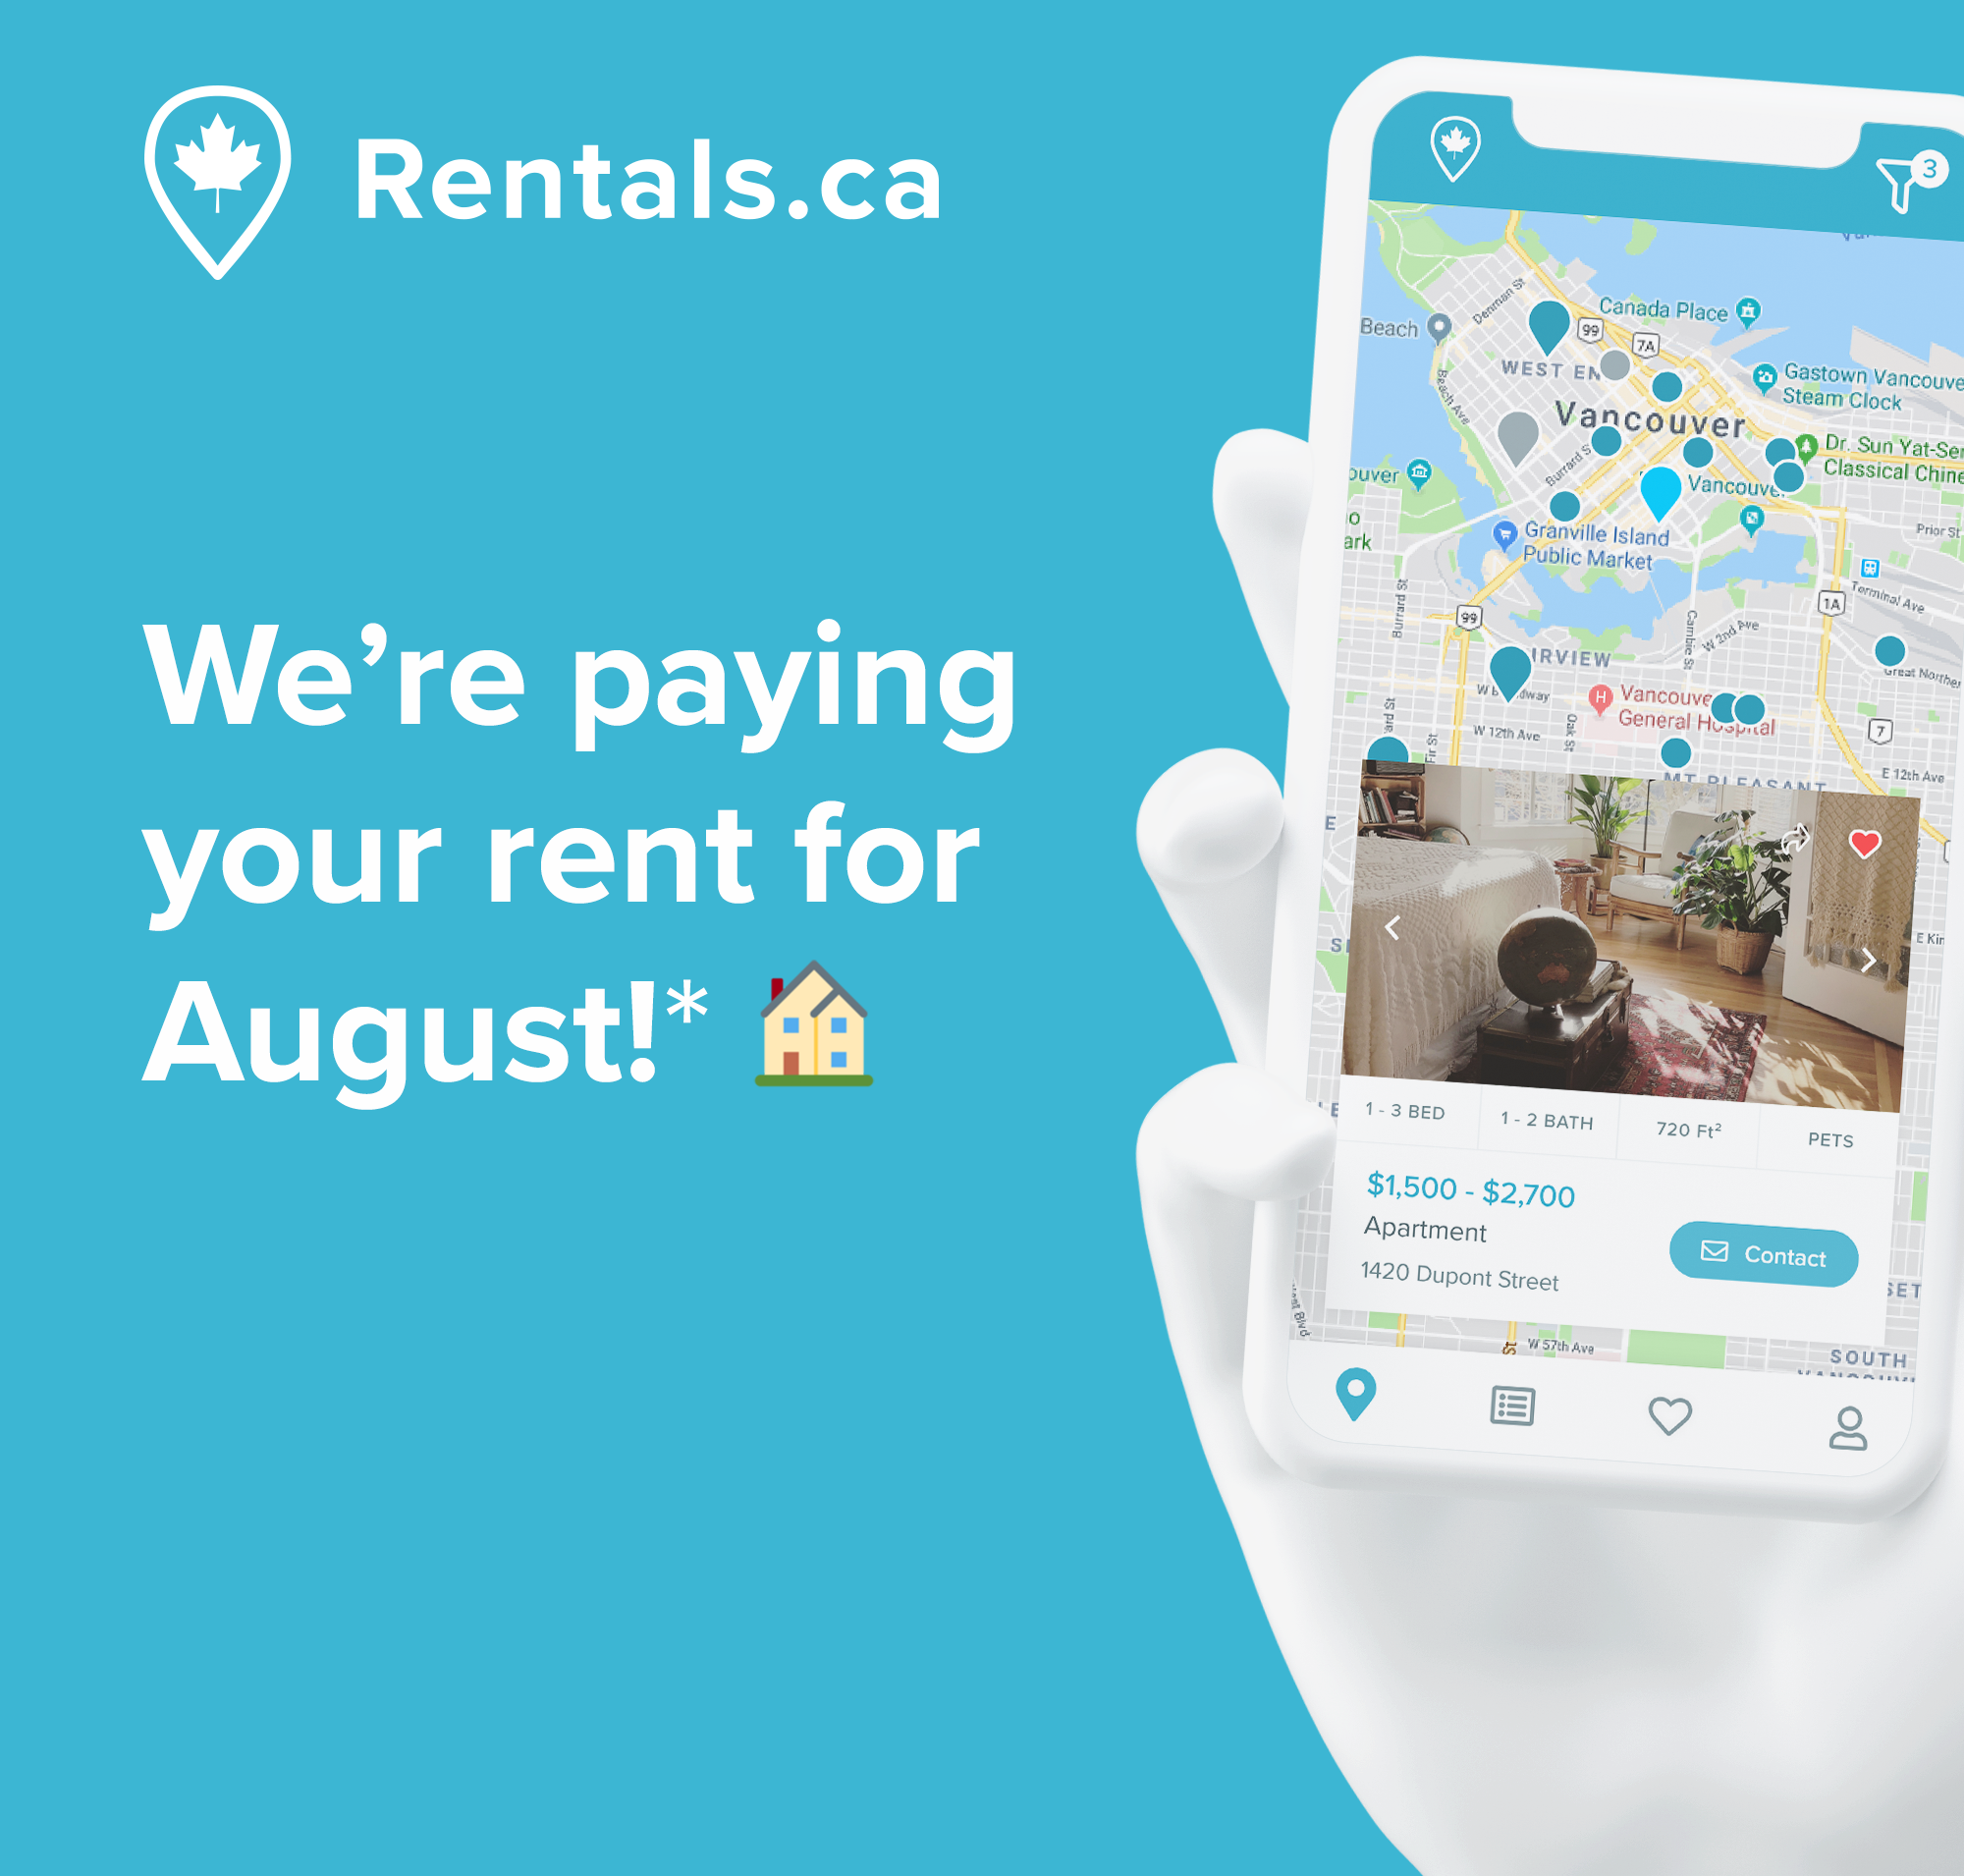 Ottawa renter wins free month’s rent in Rentals.ca August Facebook contest